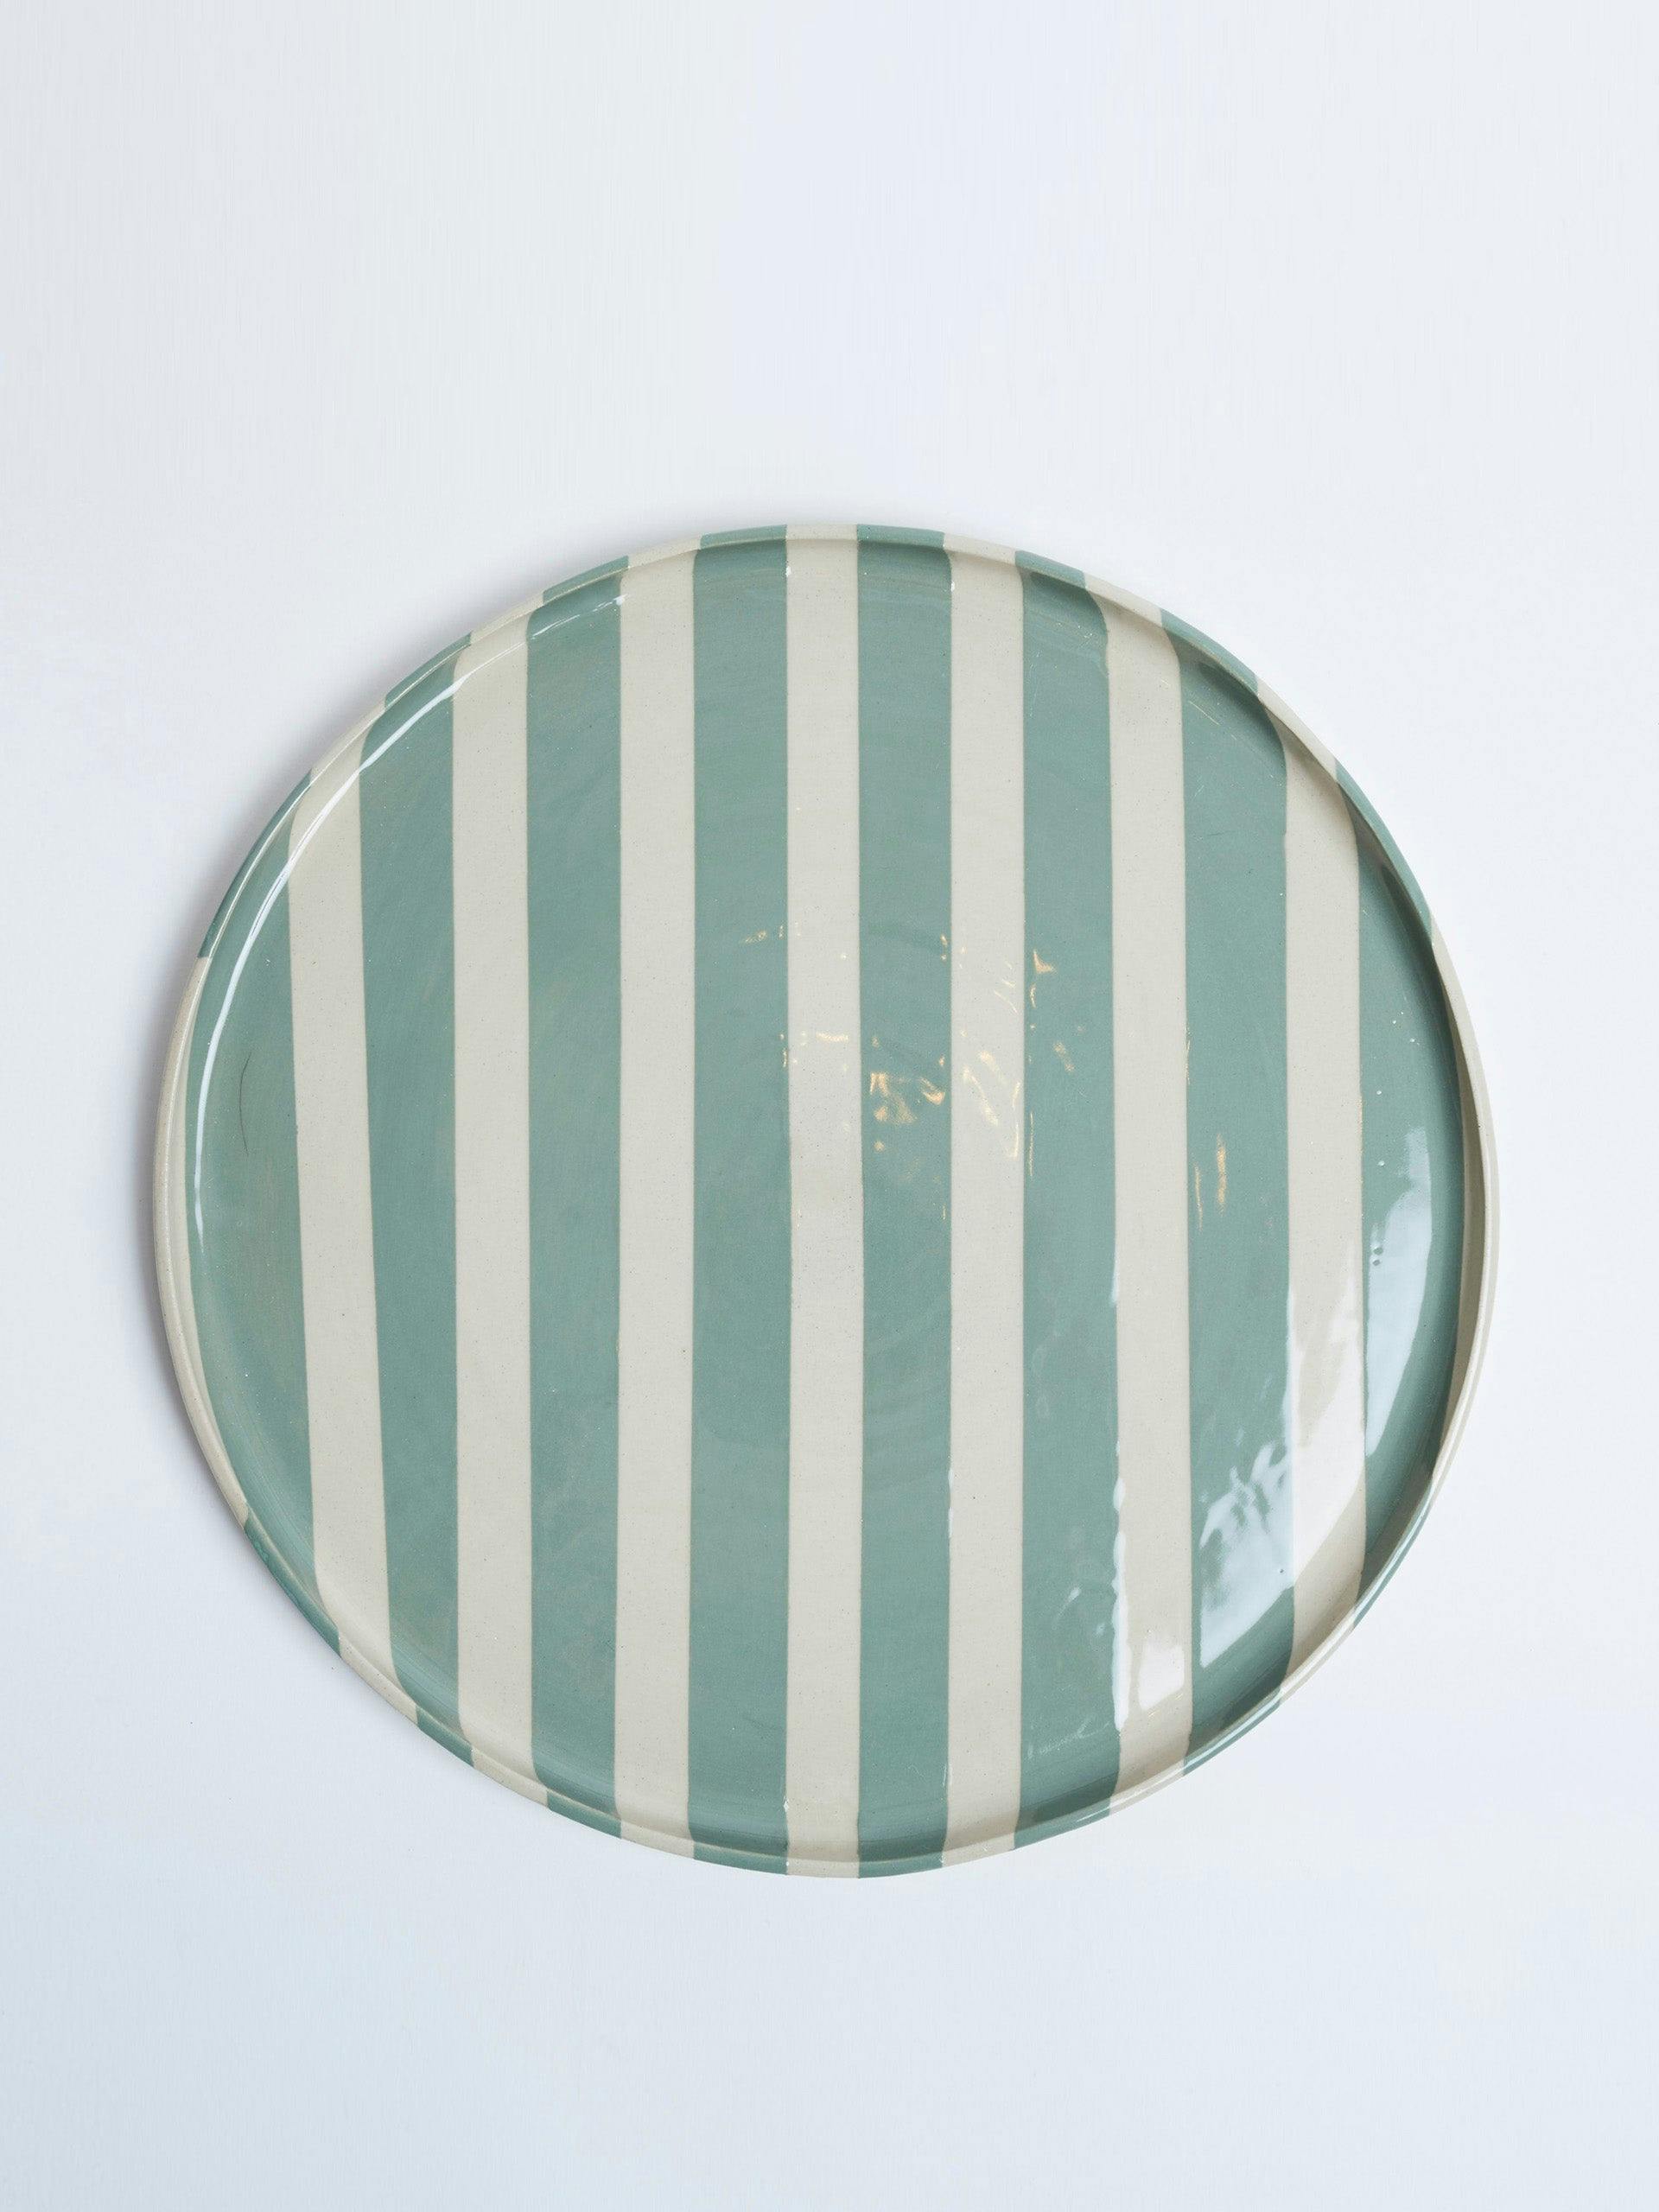 Green stripe serving platter